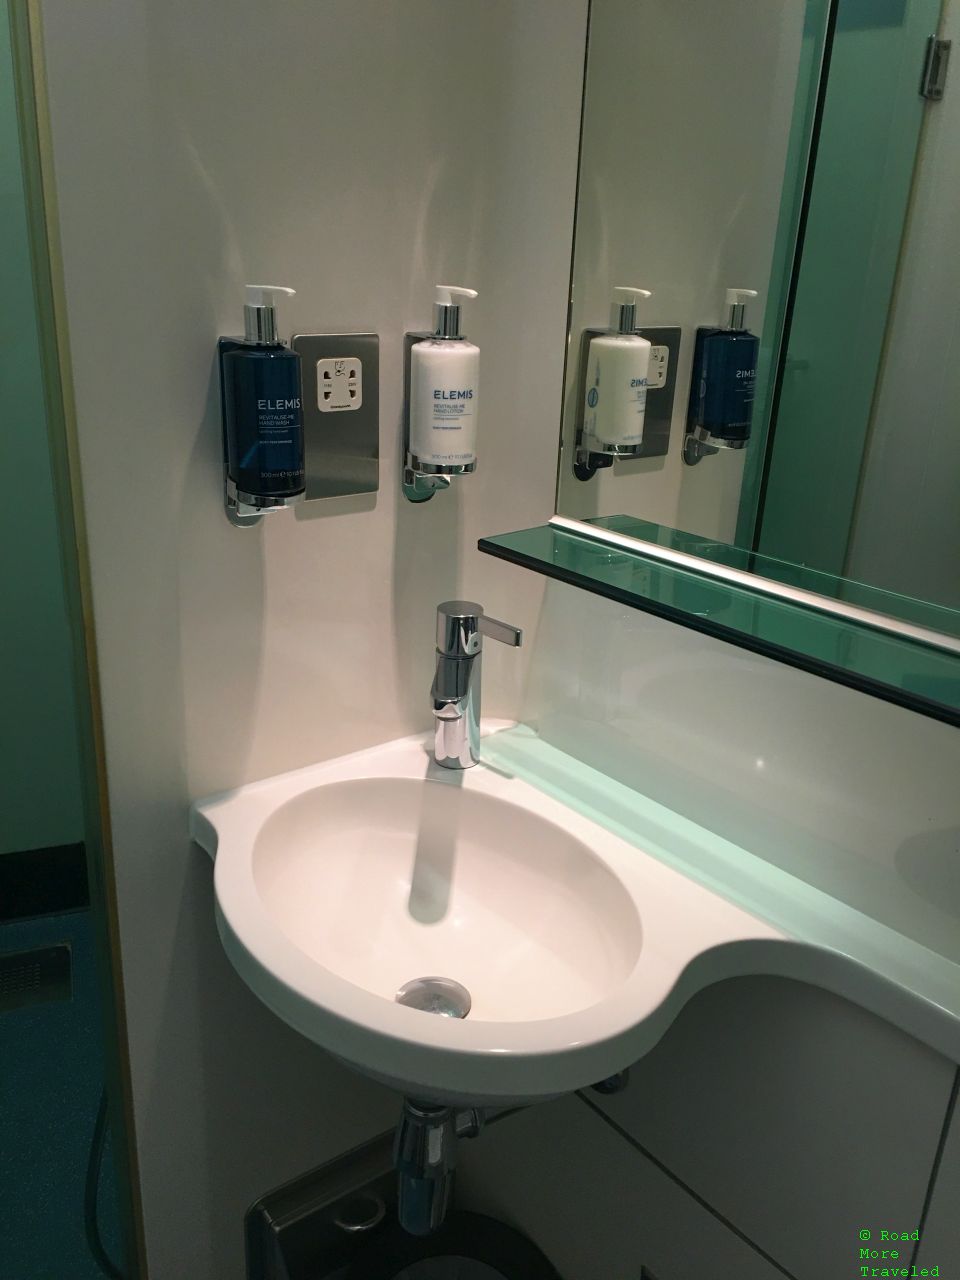 BA LHR T5 Arrivals Lounge - shower stall sink